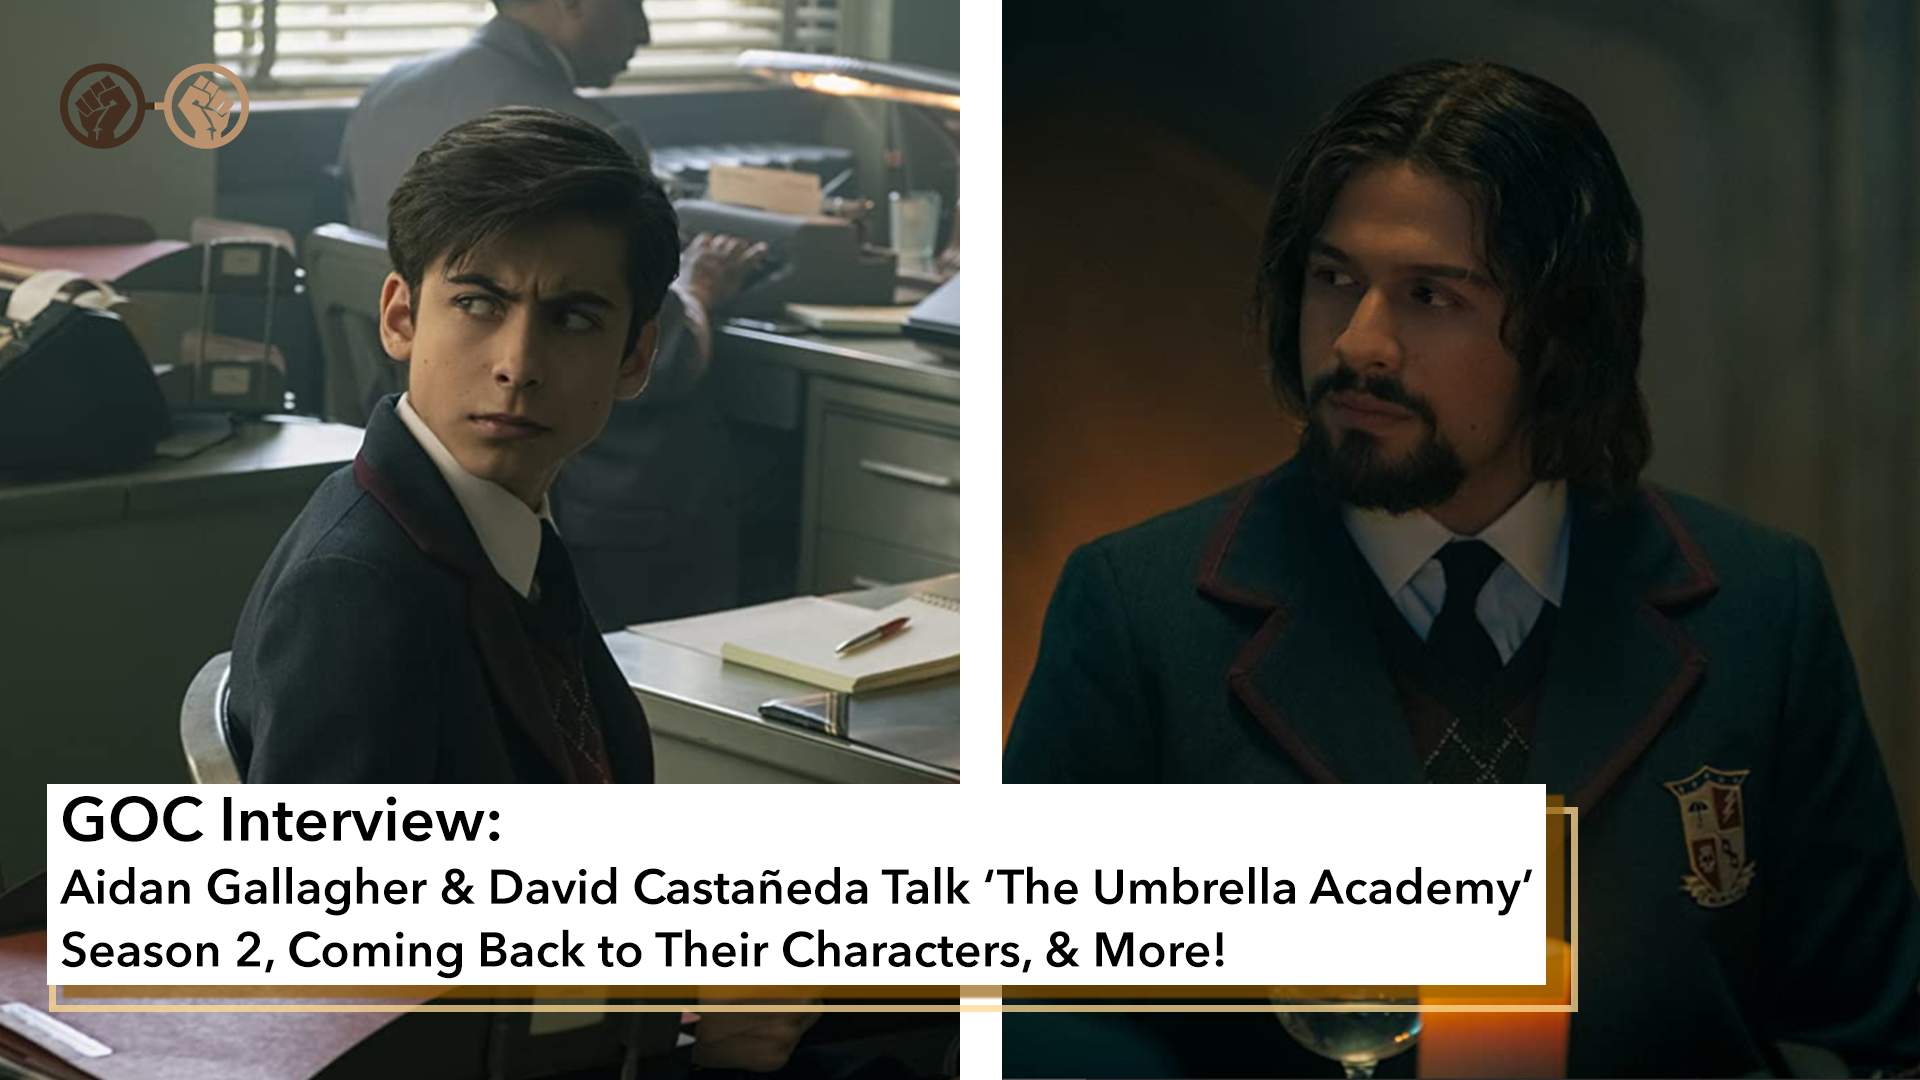 Interview: Aidan Gallagher and David Castaneda Talk Season 2 of ‘The Umbrella Academy’, Working With Ritu Arya & More